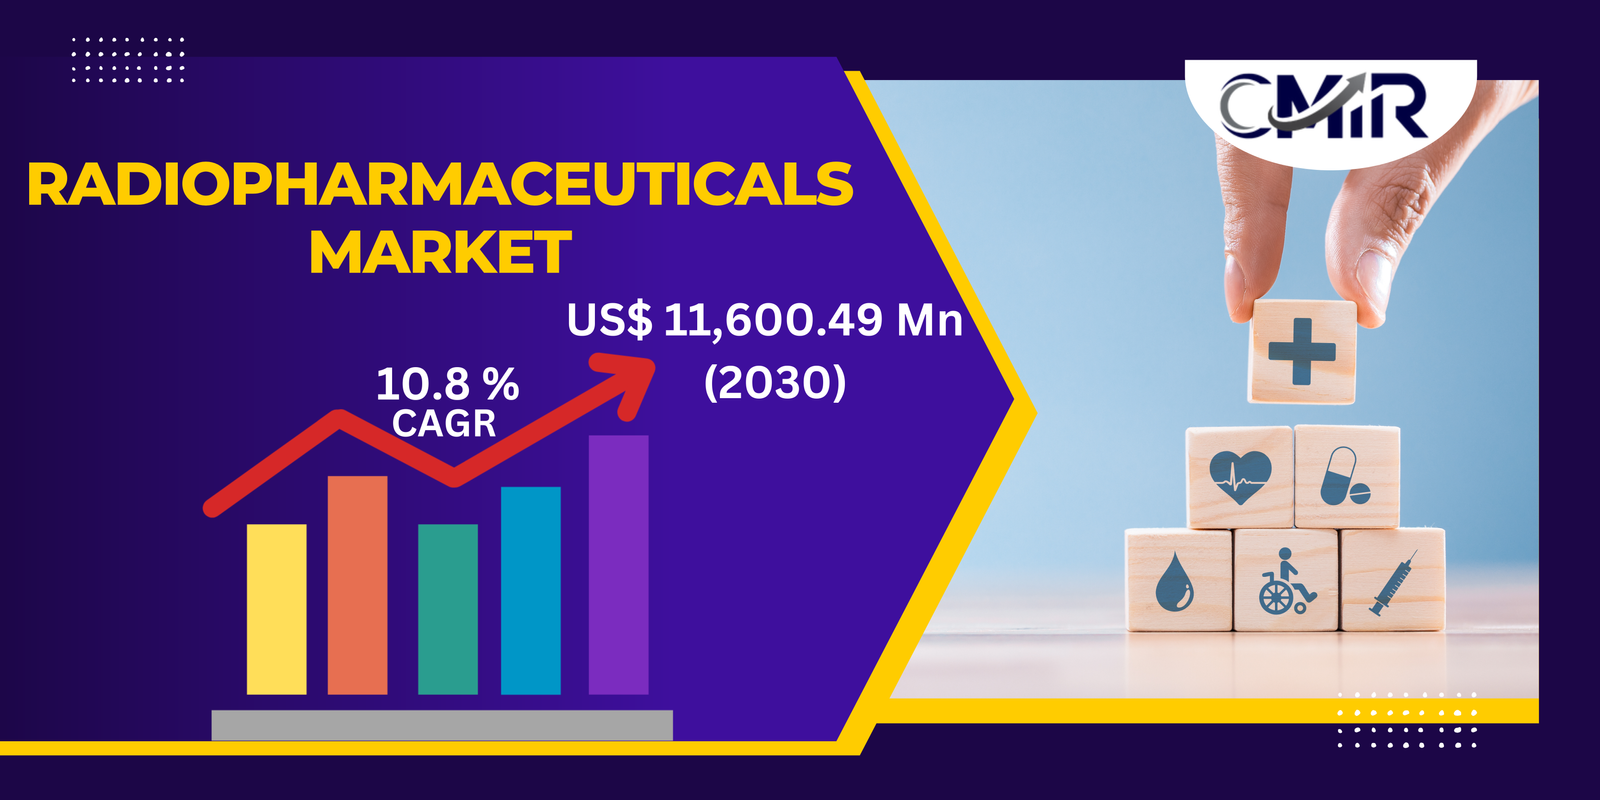 Radiopharmaceuticals Market